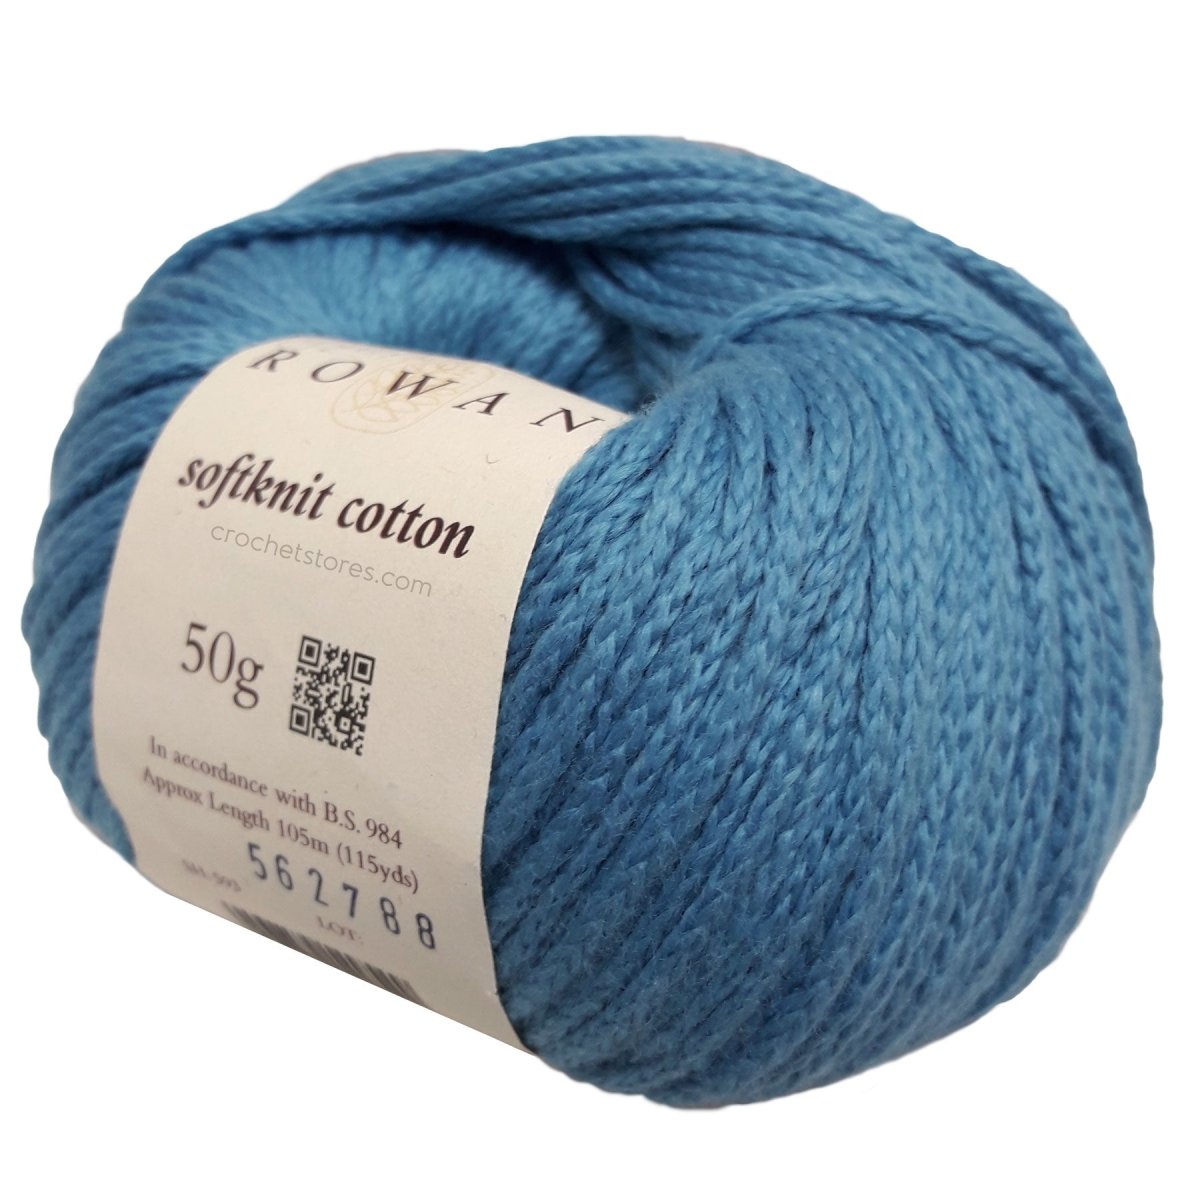 SOFTKNIT COTTON - Crochetstores9802155-5784082700896899